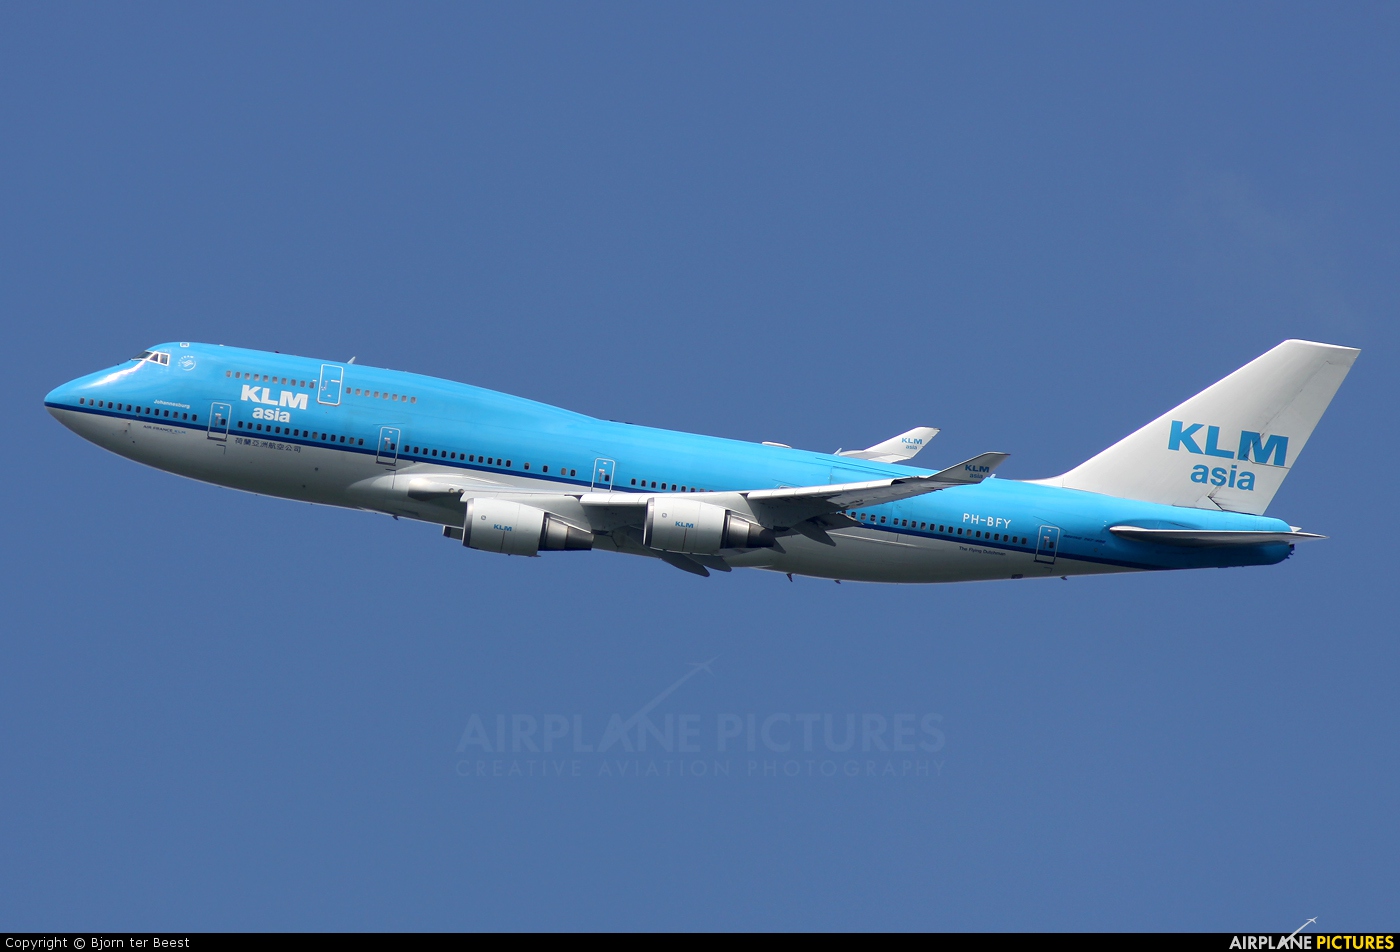 KLM Asia PH-BFY aircraft at Amsterdam - Schiphol